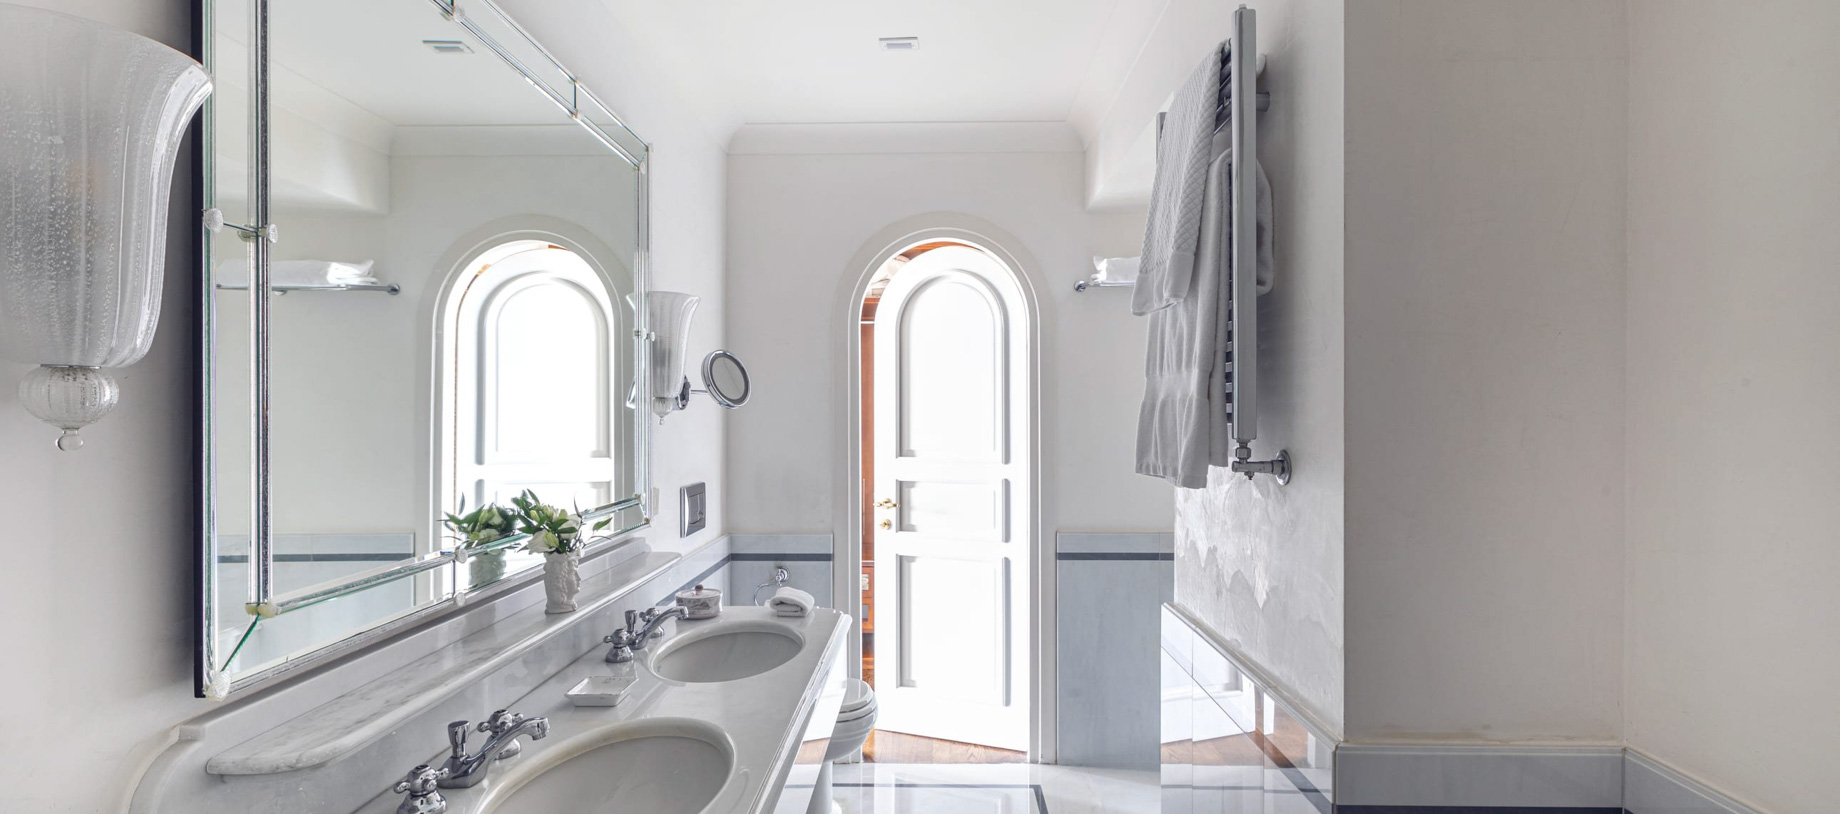 137 – Grand Hotel Timeo, A Belmond Hotel – Taormina, Italy – Bathroom